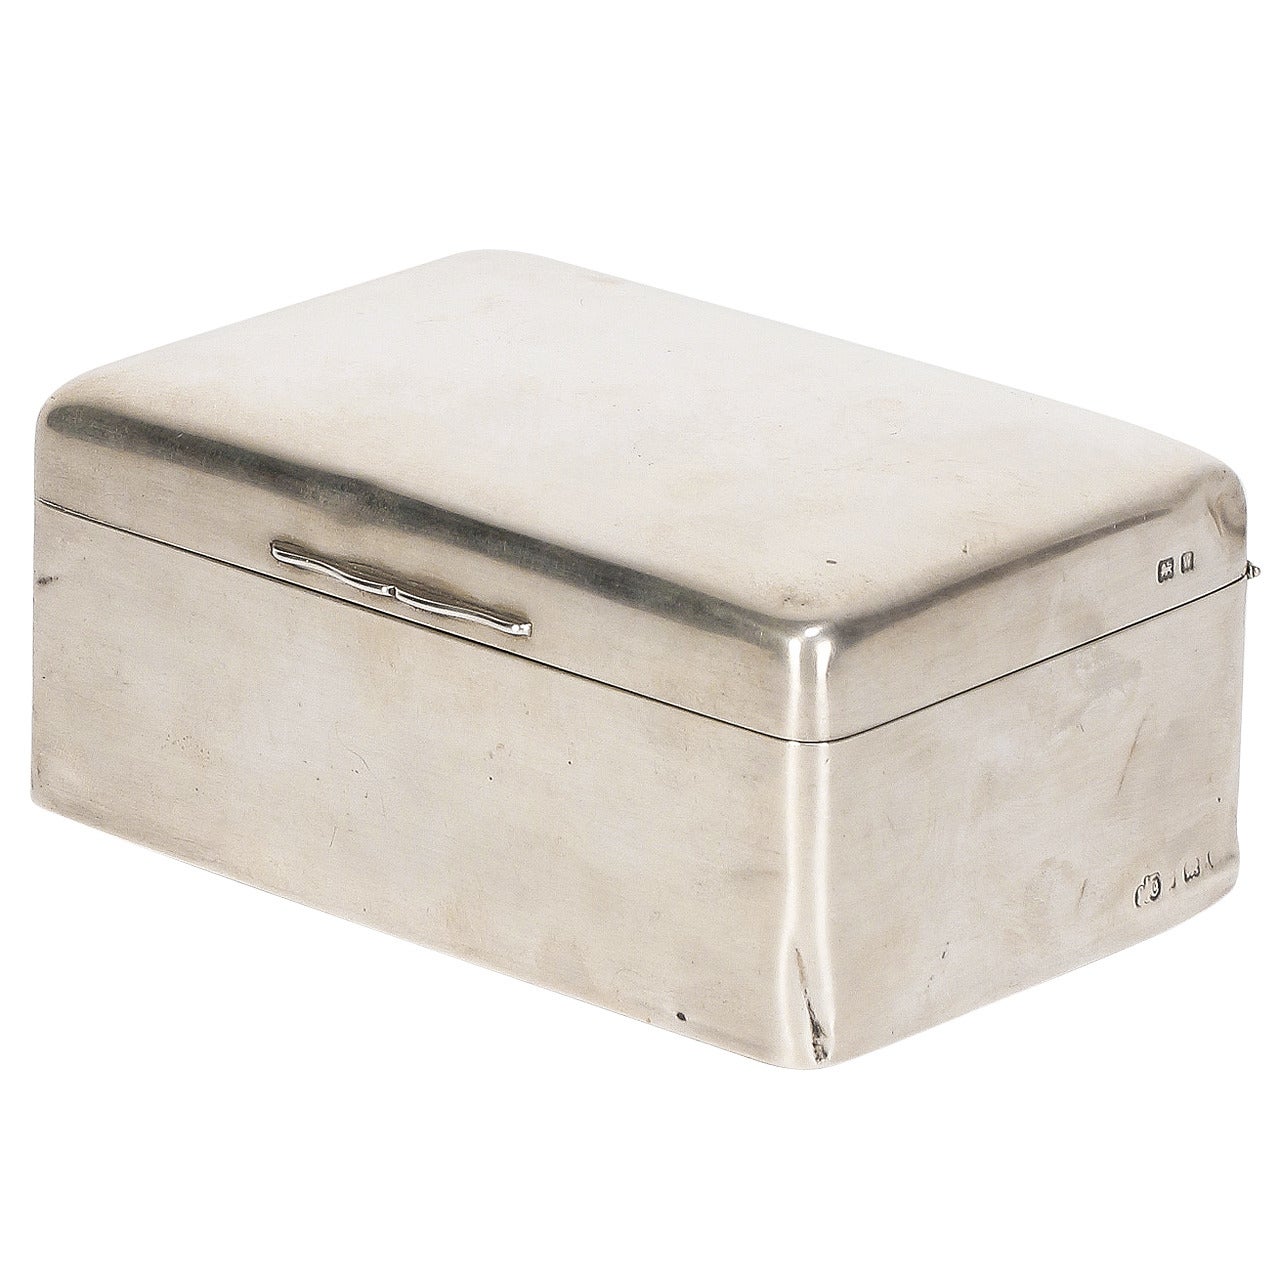 Antique English Silver Box A & J Zimmerman, 1910